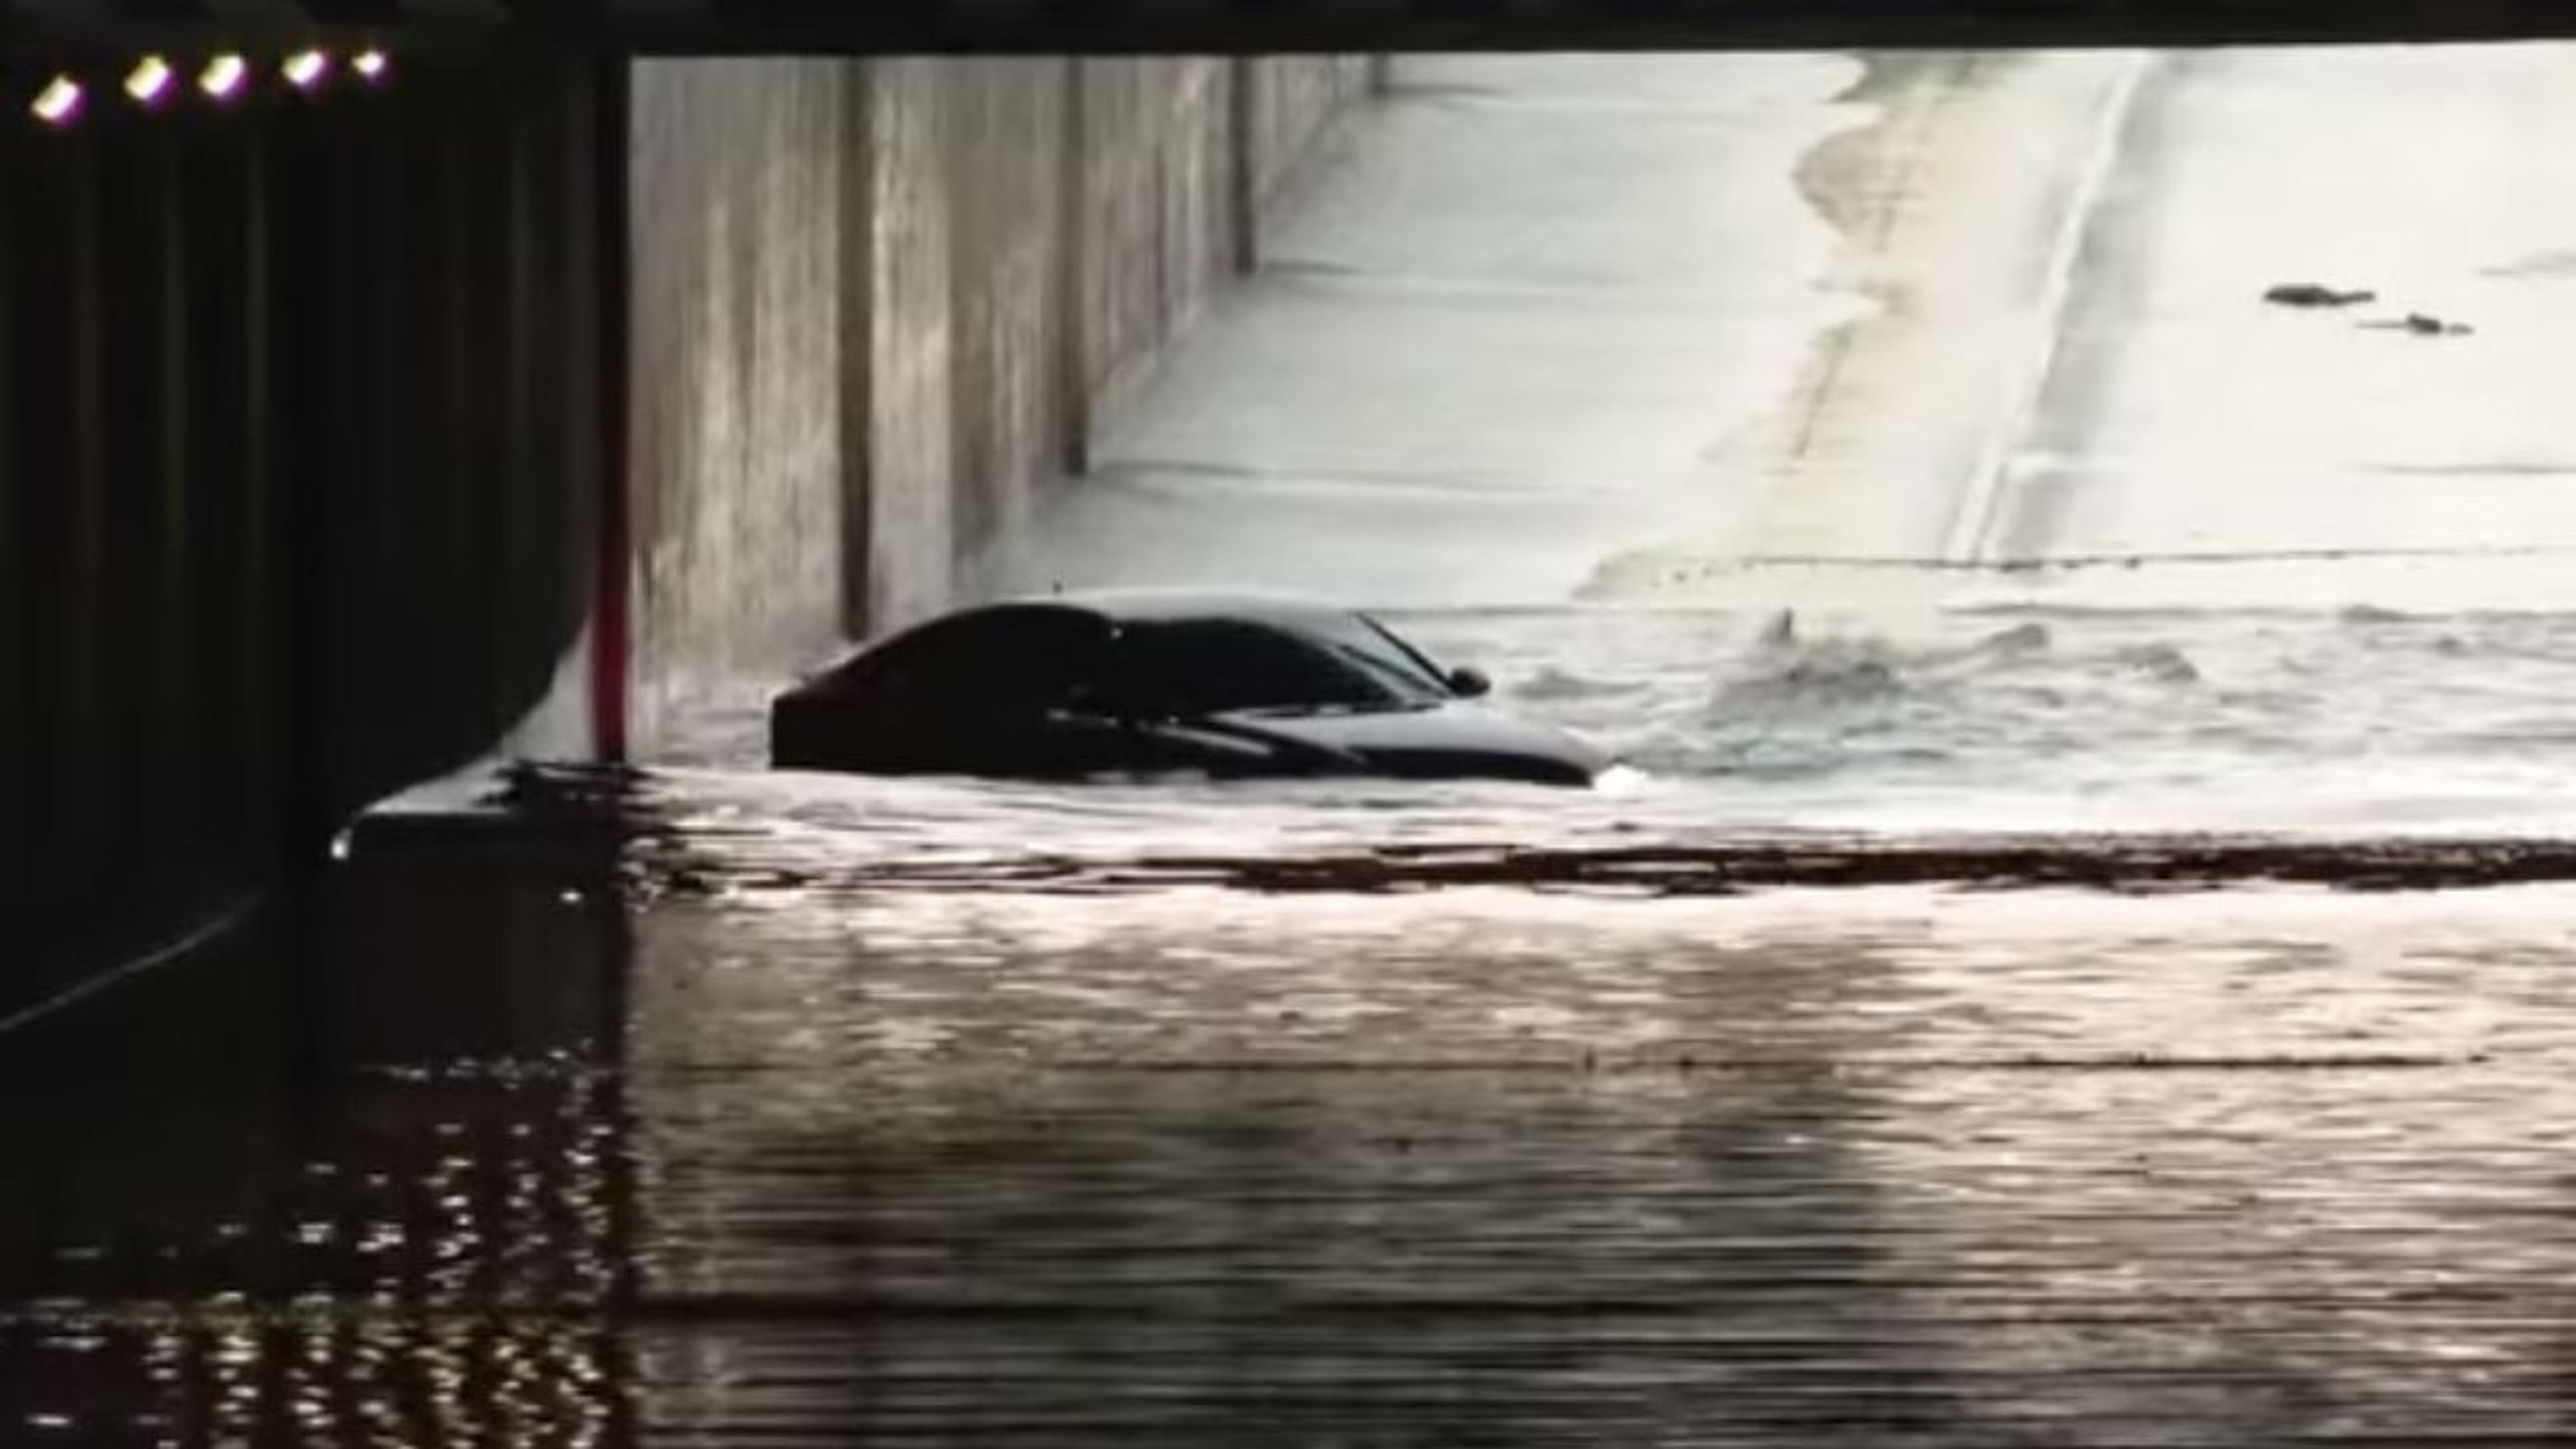 peligro-adentrarse-zonas-inundadas-coche